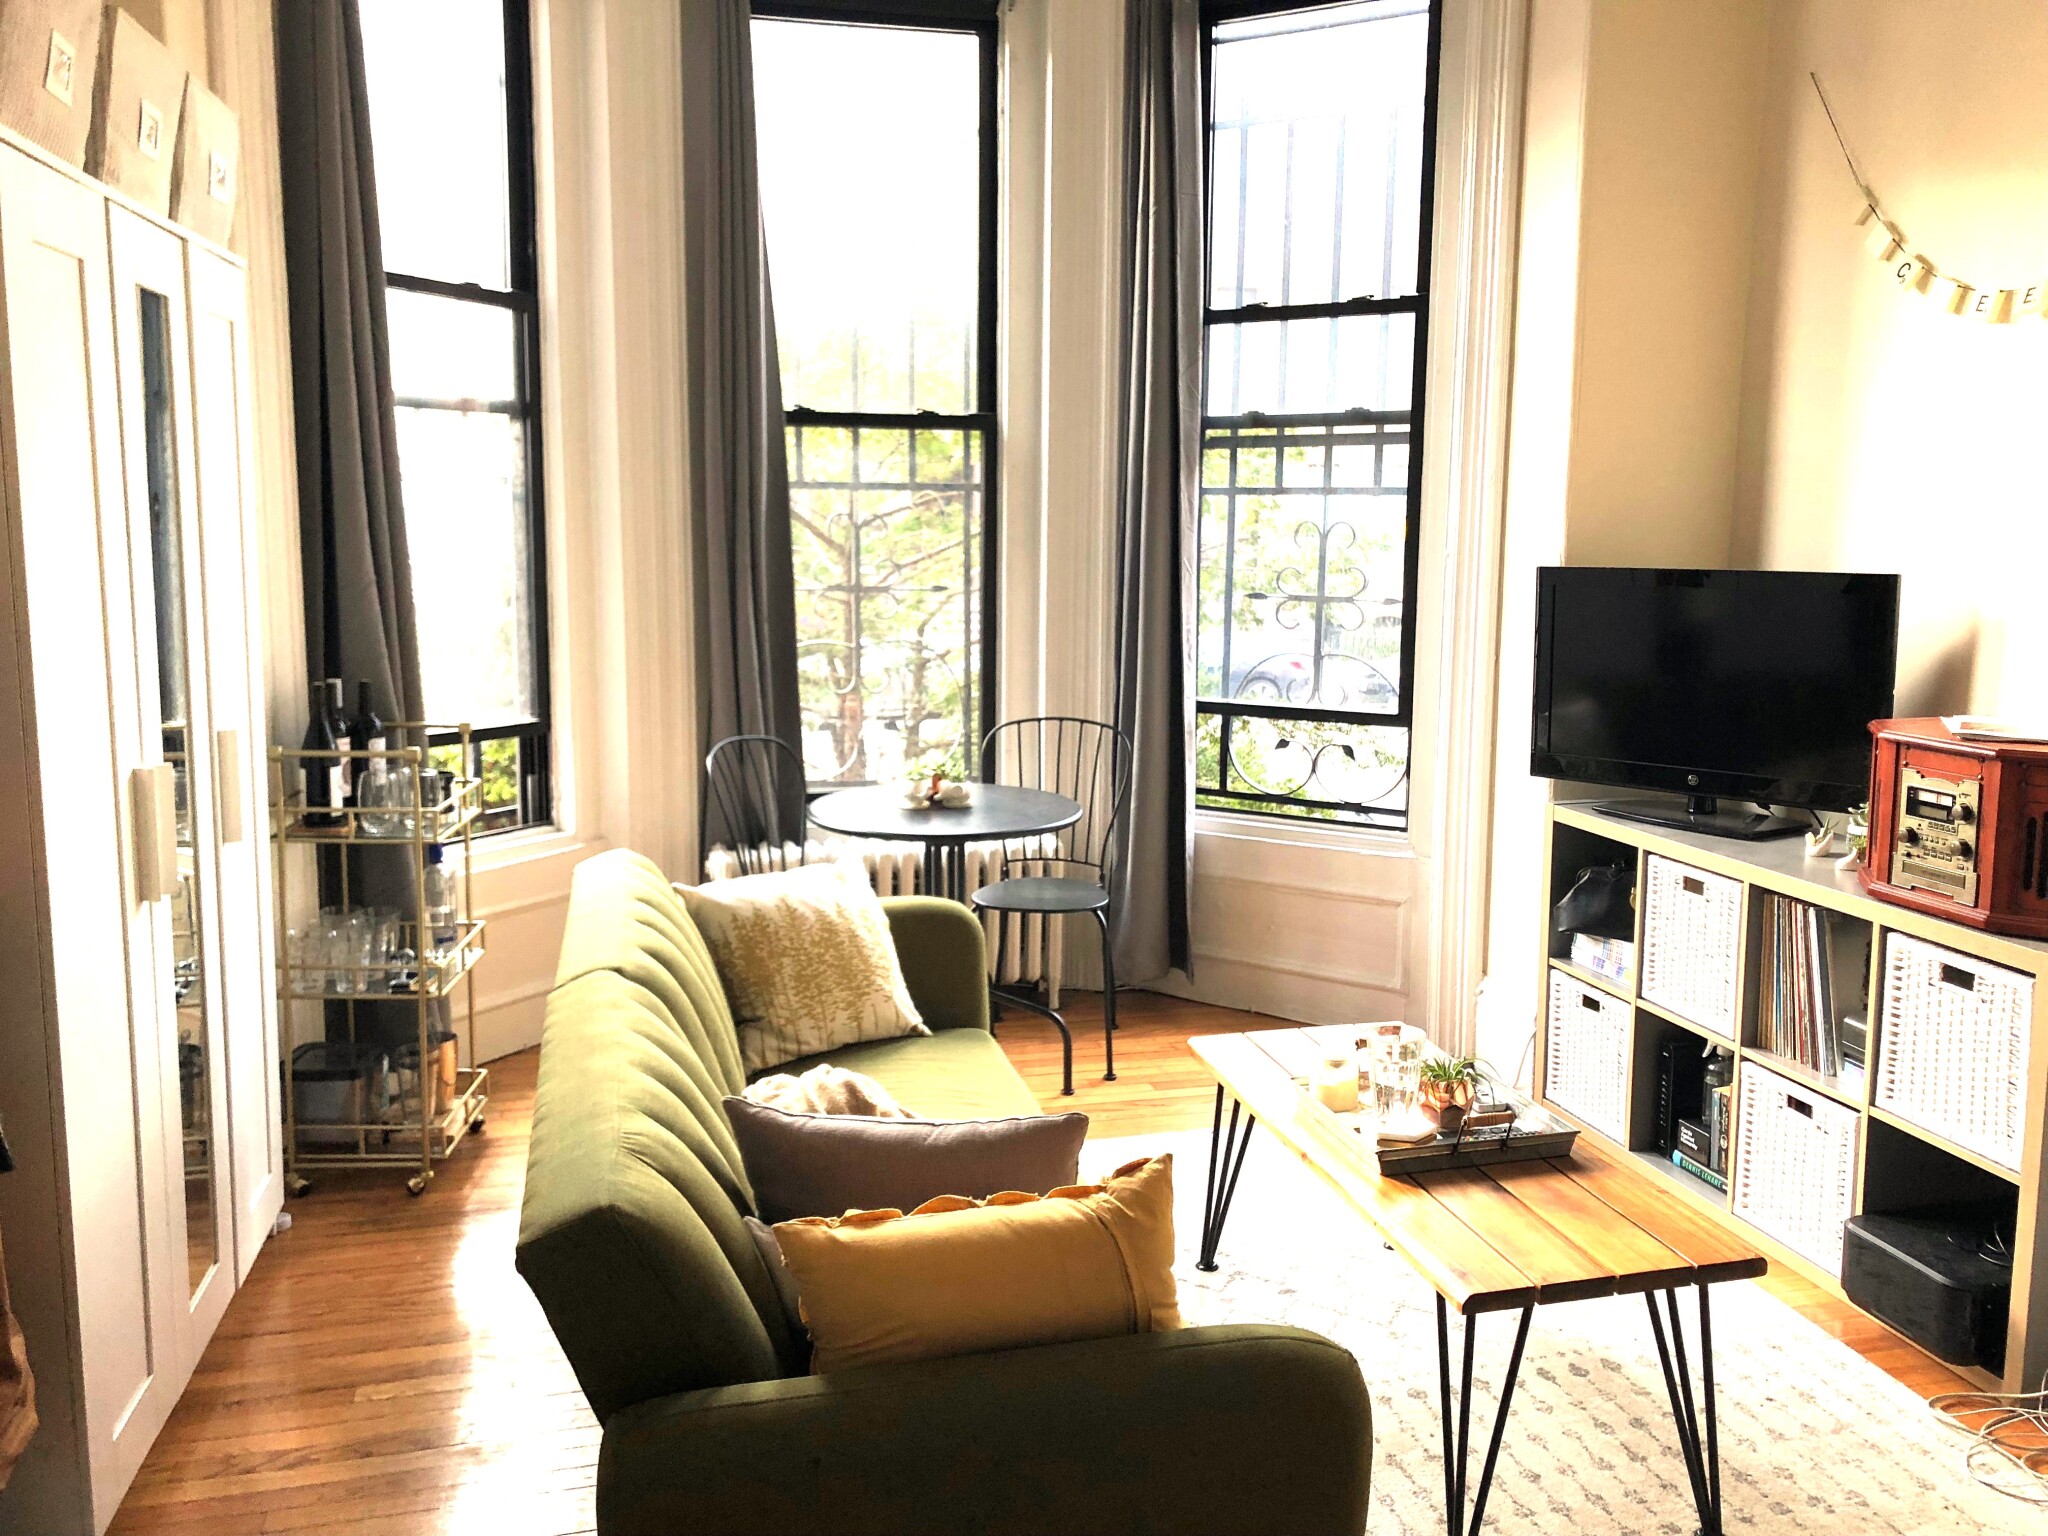 Photos of apartment on Fay,Boston MA 02118